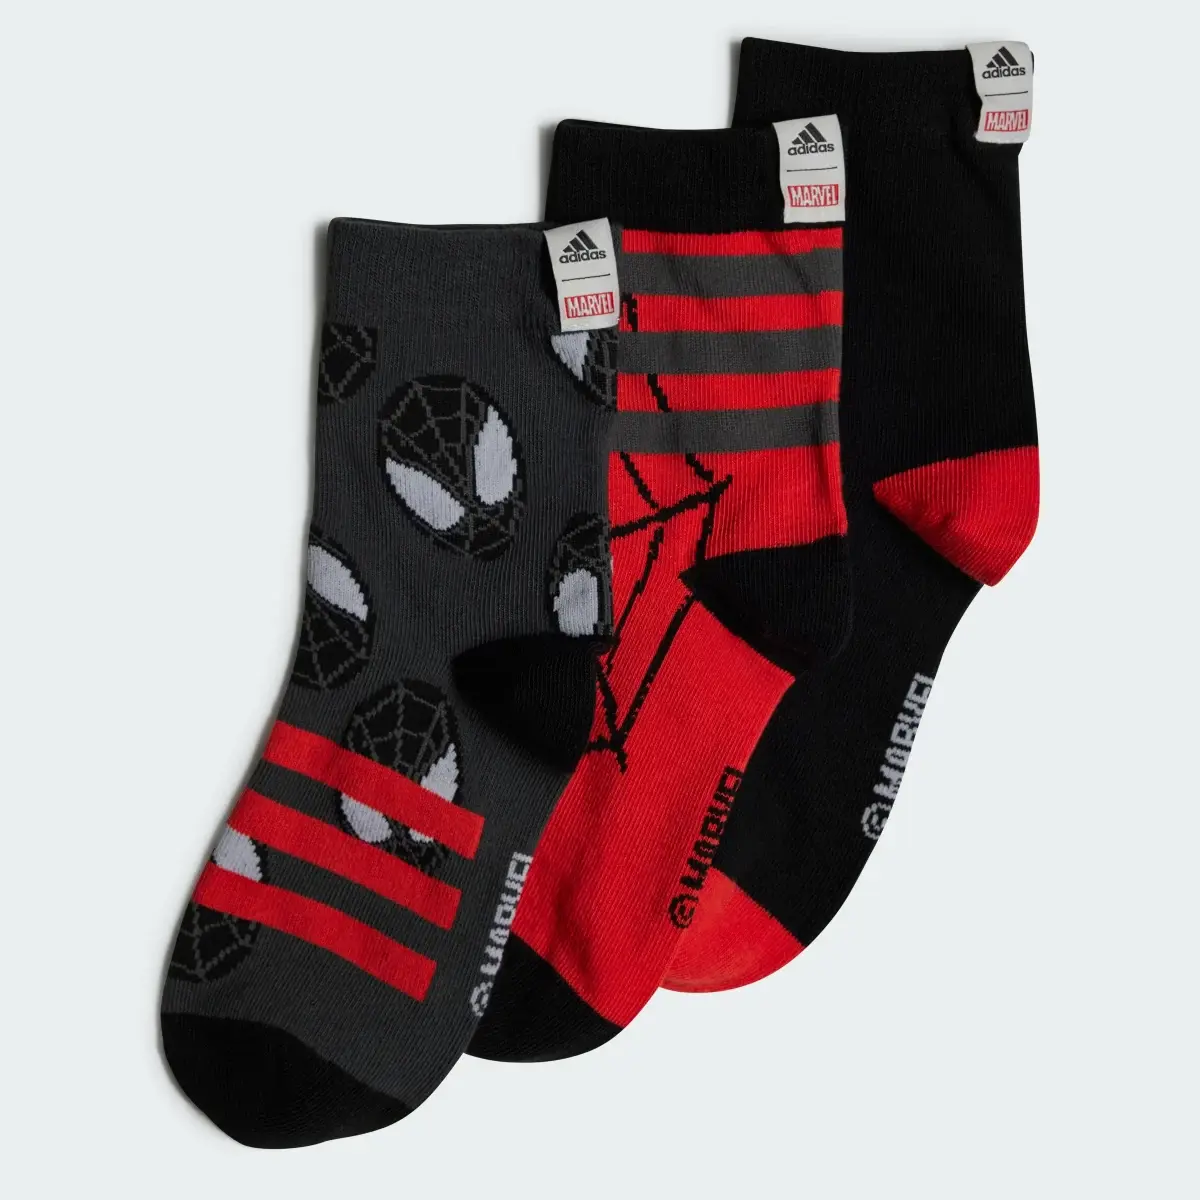 Adidas Marvel Spider-Man Bilekli Çorap - 3 Çift. 1